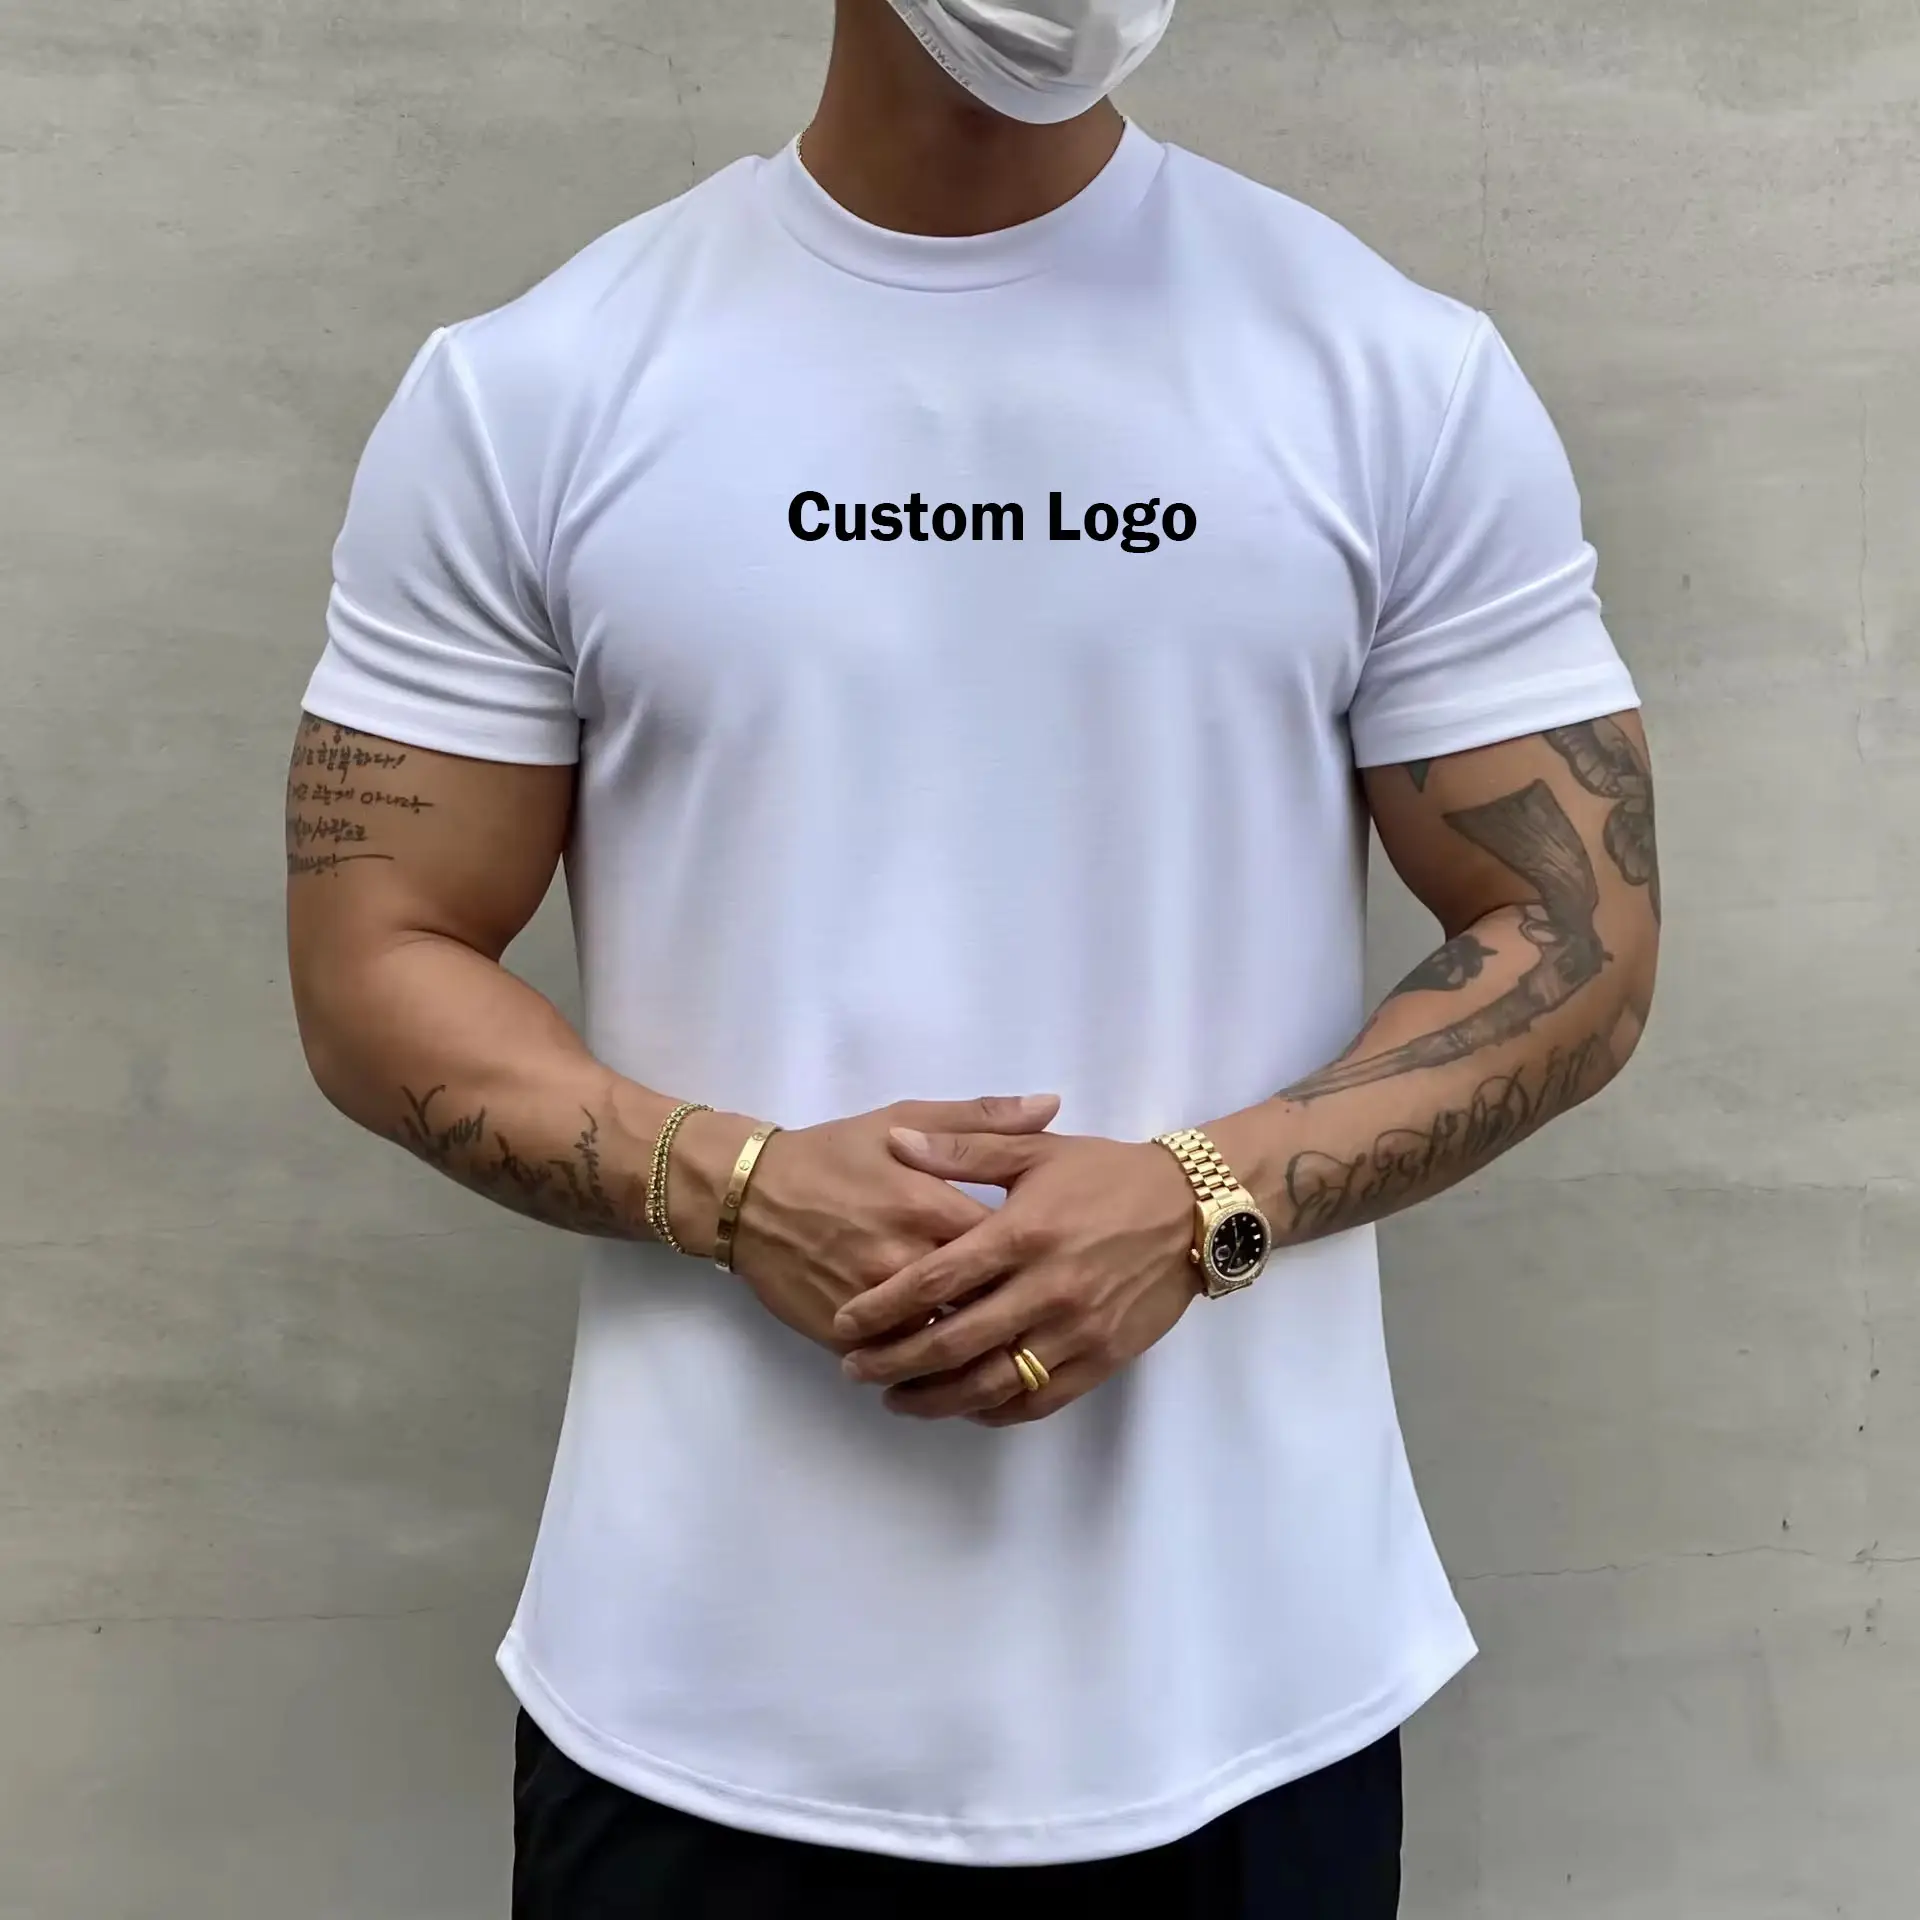 कस्टम कॉटन स्पैन्डेक्स टीशर्ट छोटी आस्तीन वाली जिम शर्ट पुरुषों के लिए सादा टीशर्ट वृहदाकार सादा टी-शर्ट पुरुषों के लिए थोक डिजाइनर टी शर्ट